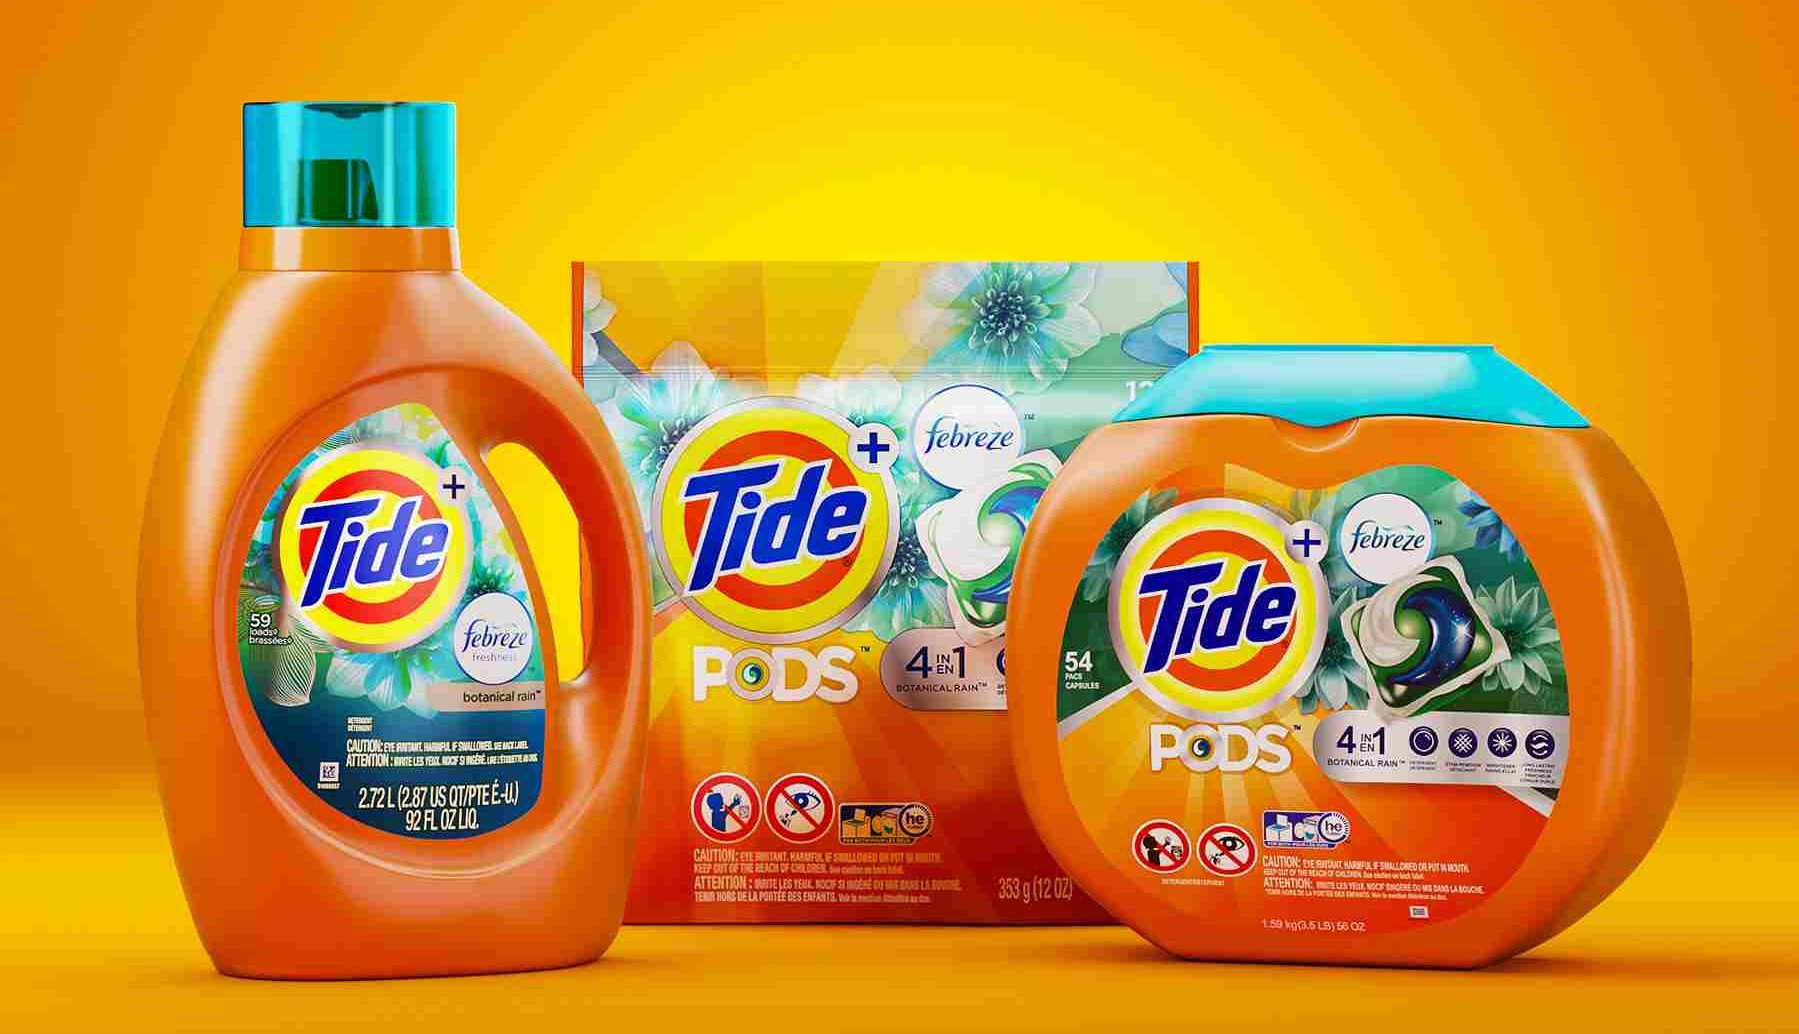 About tide detergent